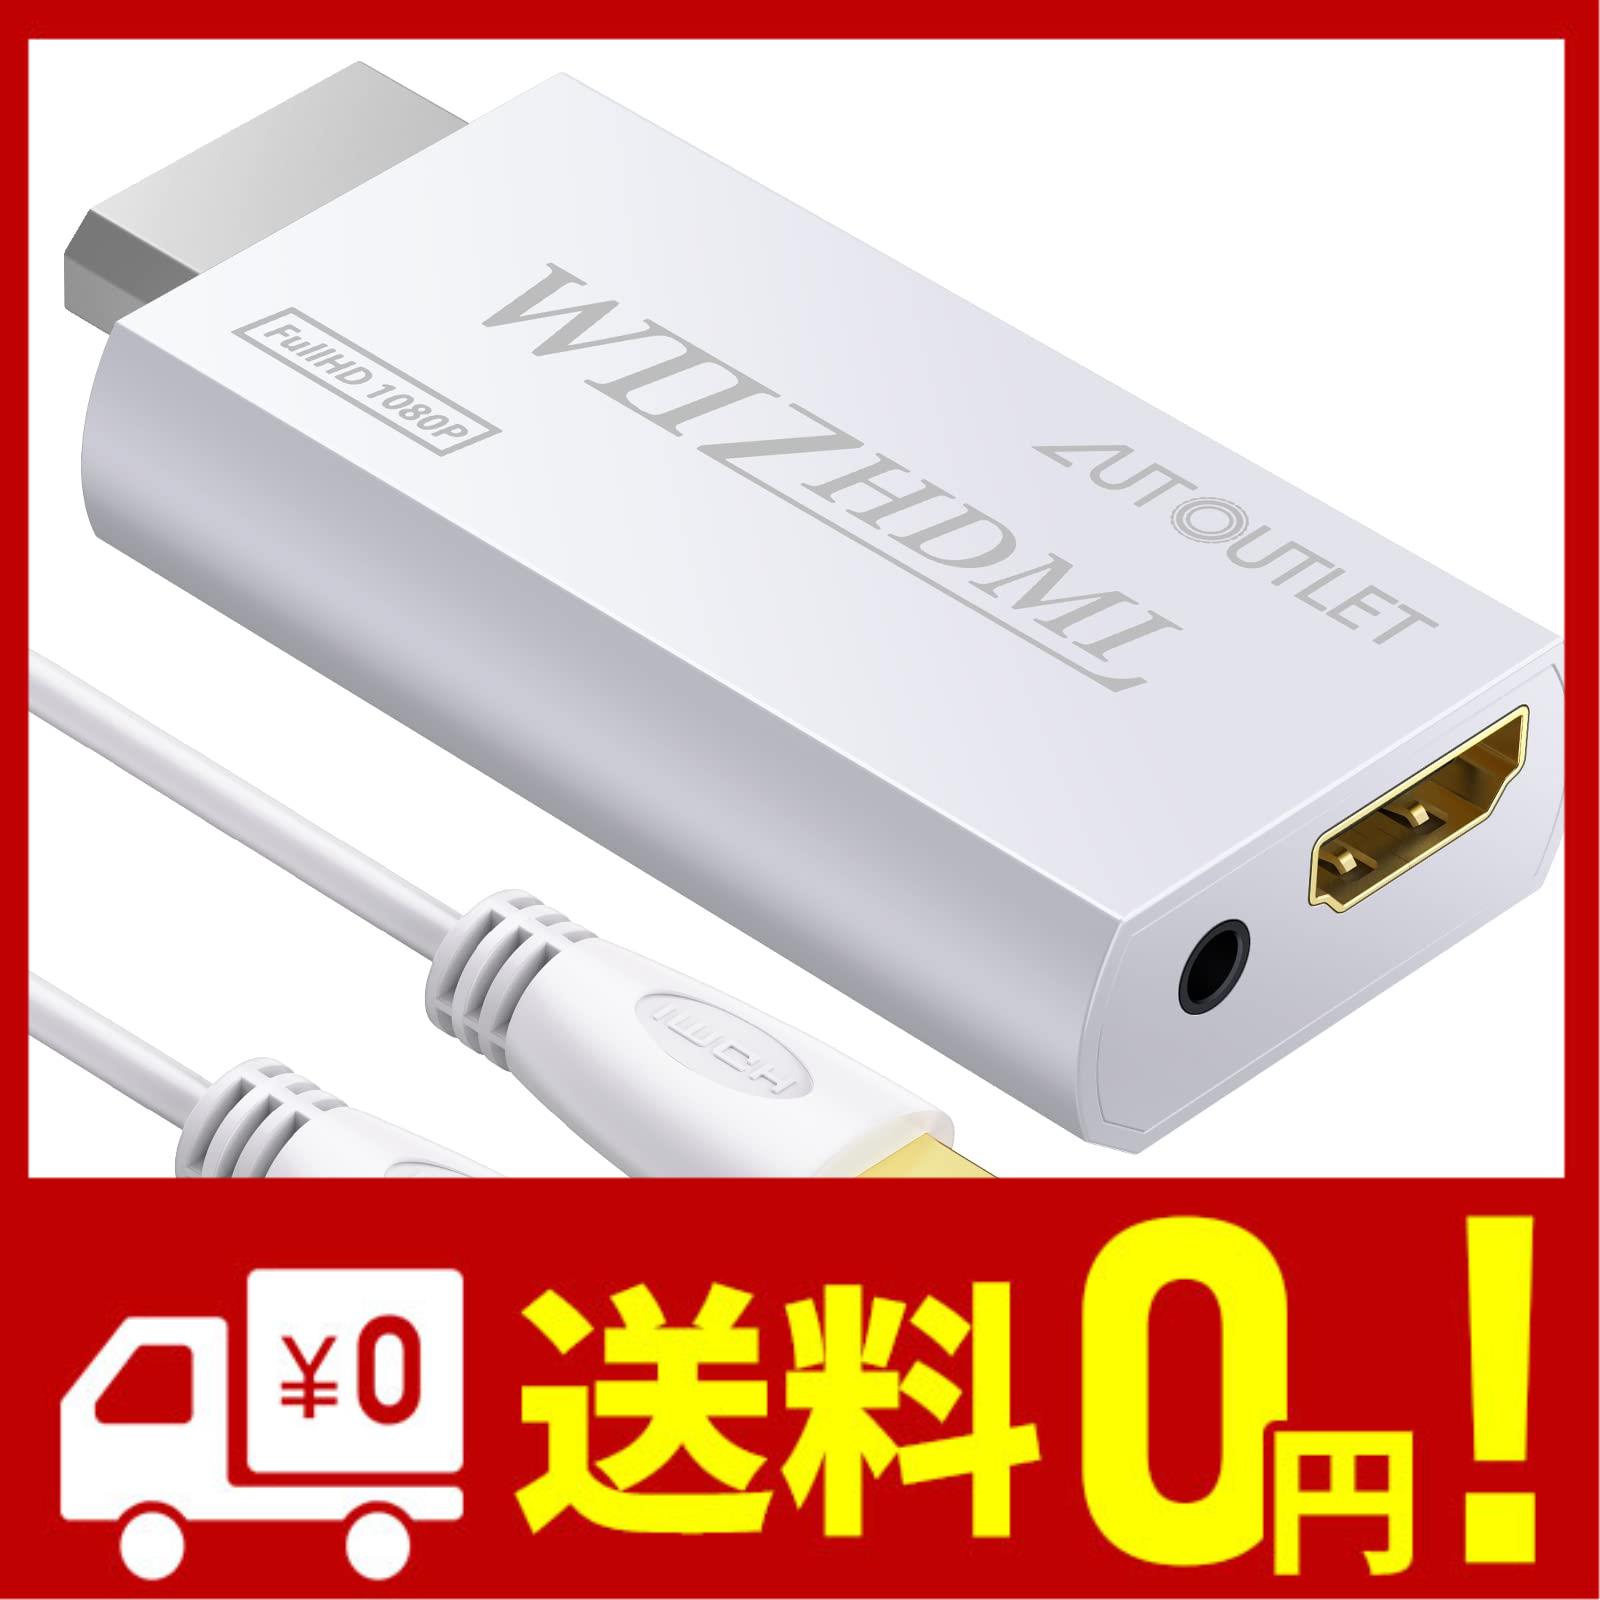 AUTOUTLET Wii to Hdmi アダプタ 1.5M HDMIケーブル付き コンバーター Wii2HDMI ビデオ オーディオ 3.5mm 720p 1080pに対応 NtdWiiディス